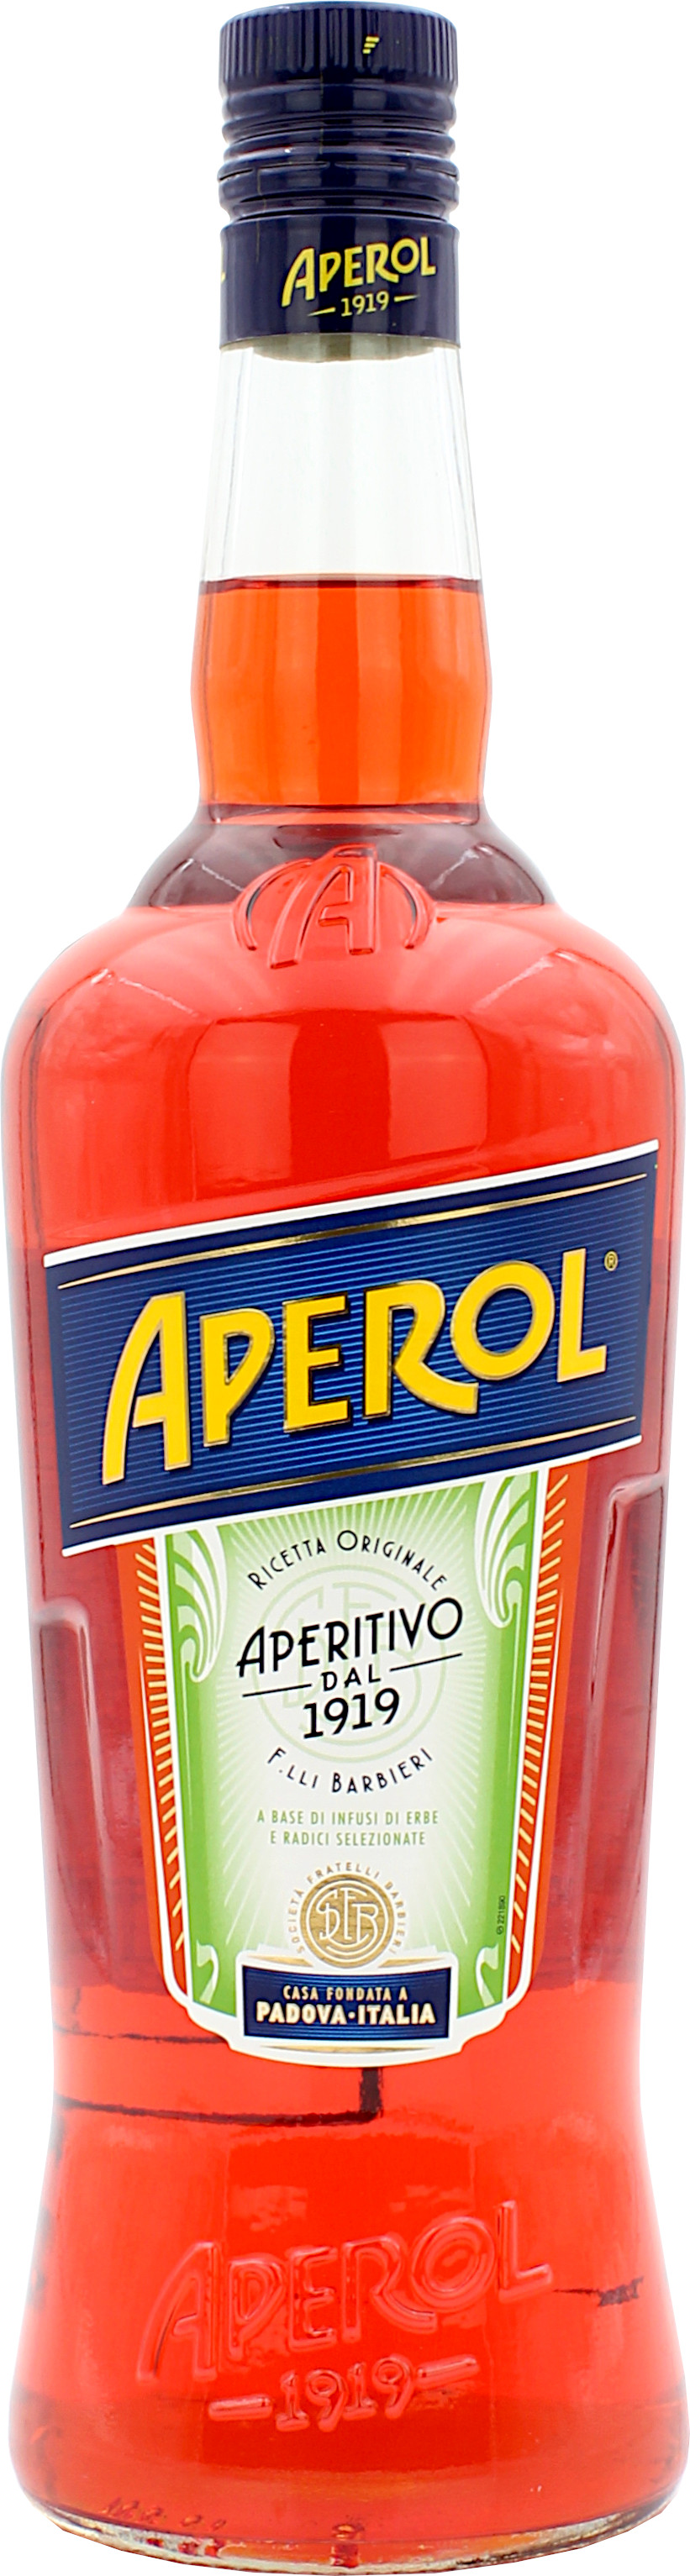 Aperol Aperitivo 11.0% 1 Liter